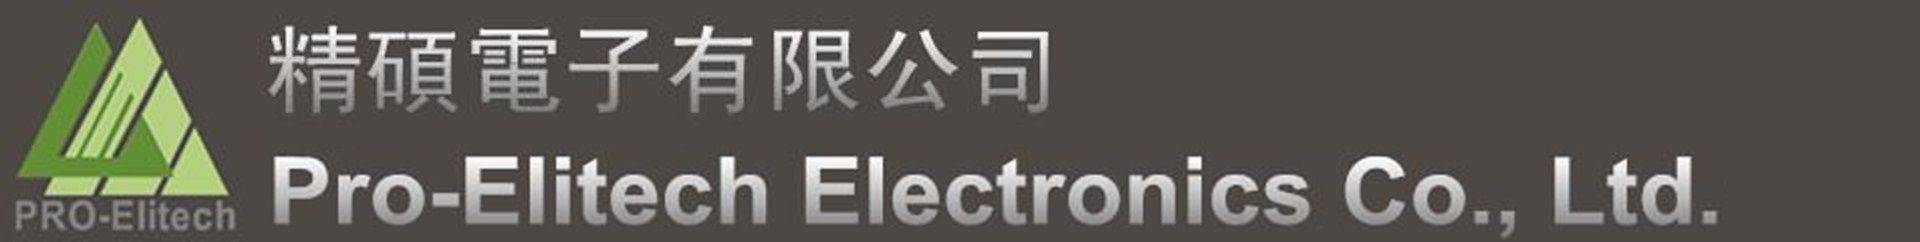 Pro-elitech Electronics Co., Ltd.